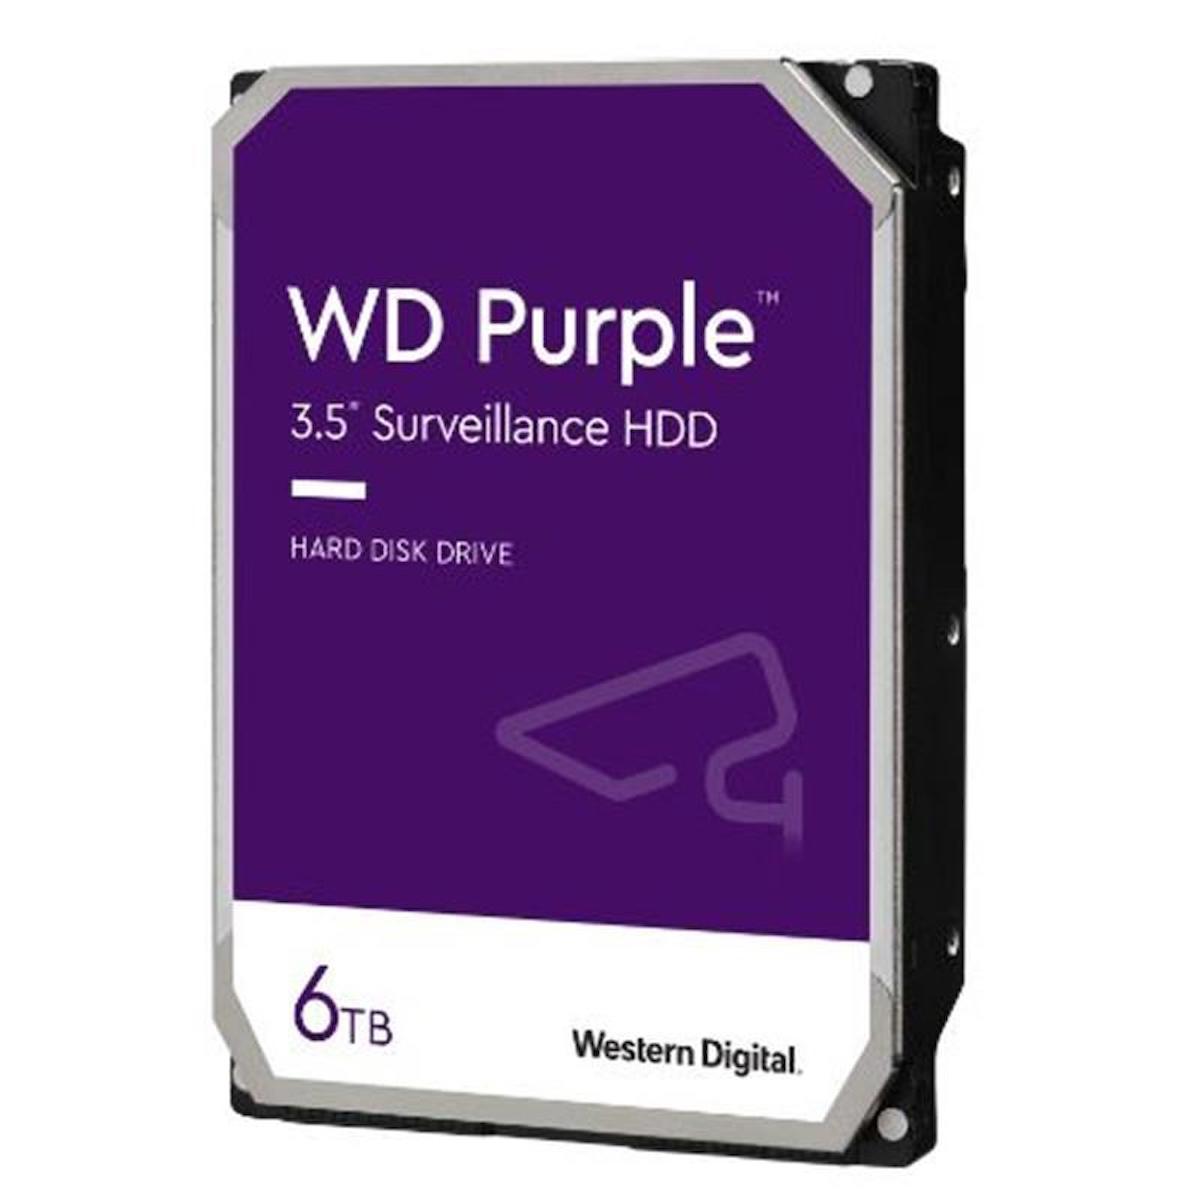 Western Digital WD Purple WD64PURZ 3.5 inç 5400 RPM 64 MB SATA 3.0 Güvenlik Kamerası Harddisk